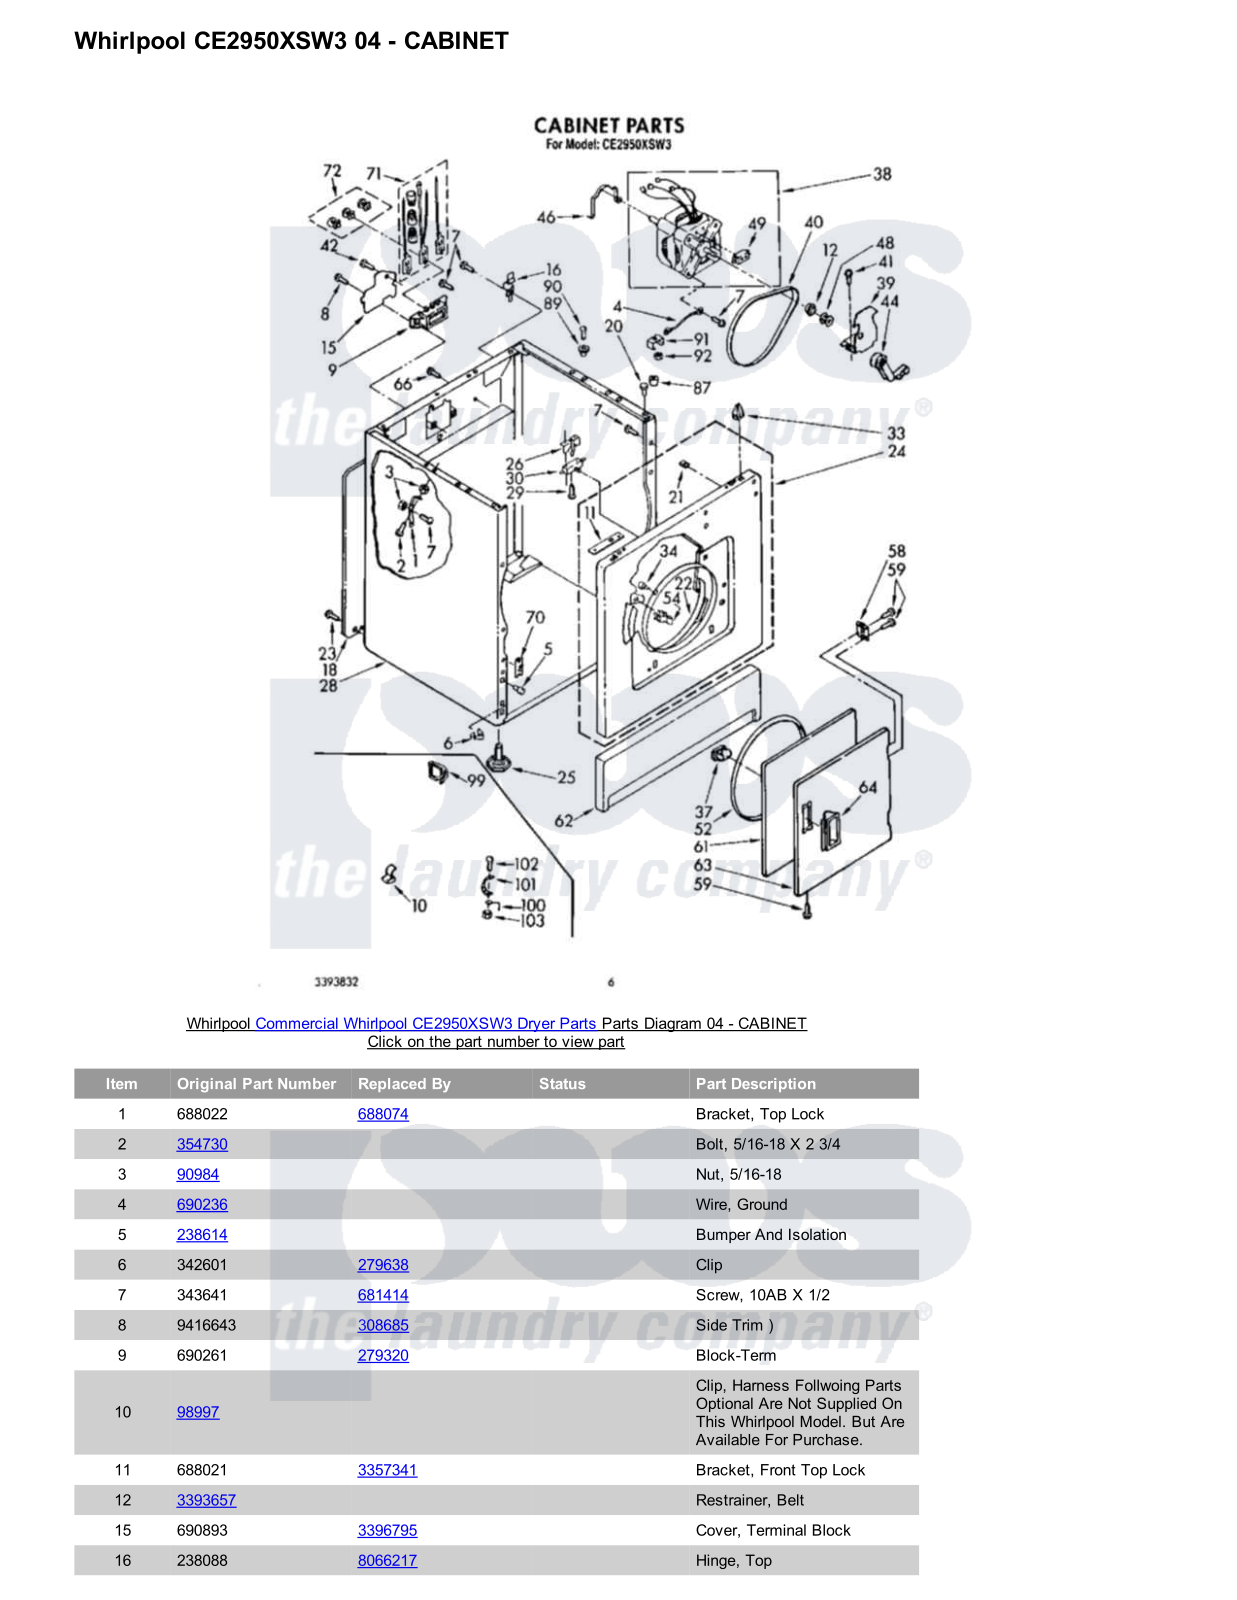 Whirlpool CE2950XSW3 Parts Diagram